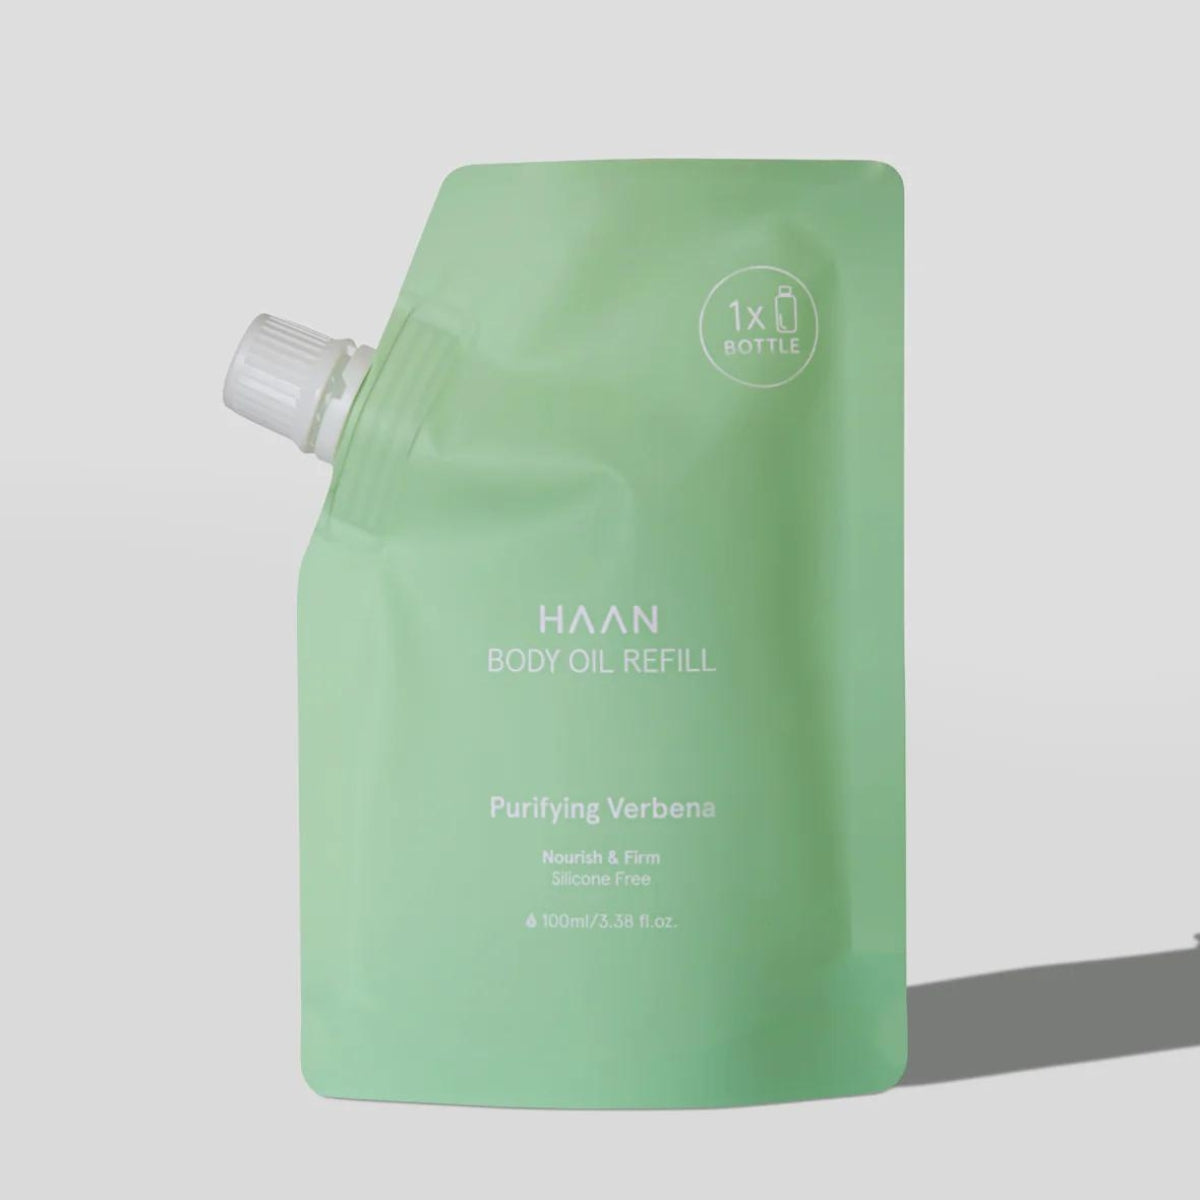 Haan Body Oil Refill Puriying Verbena - 100ml